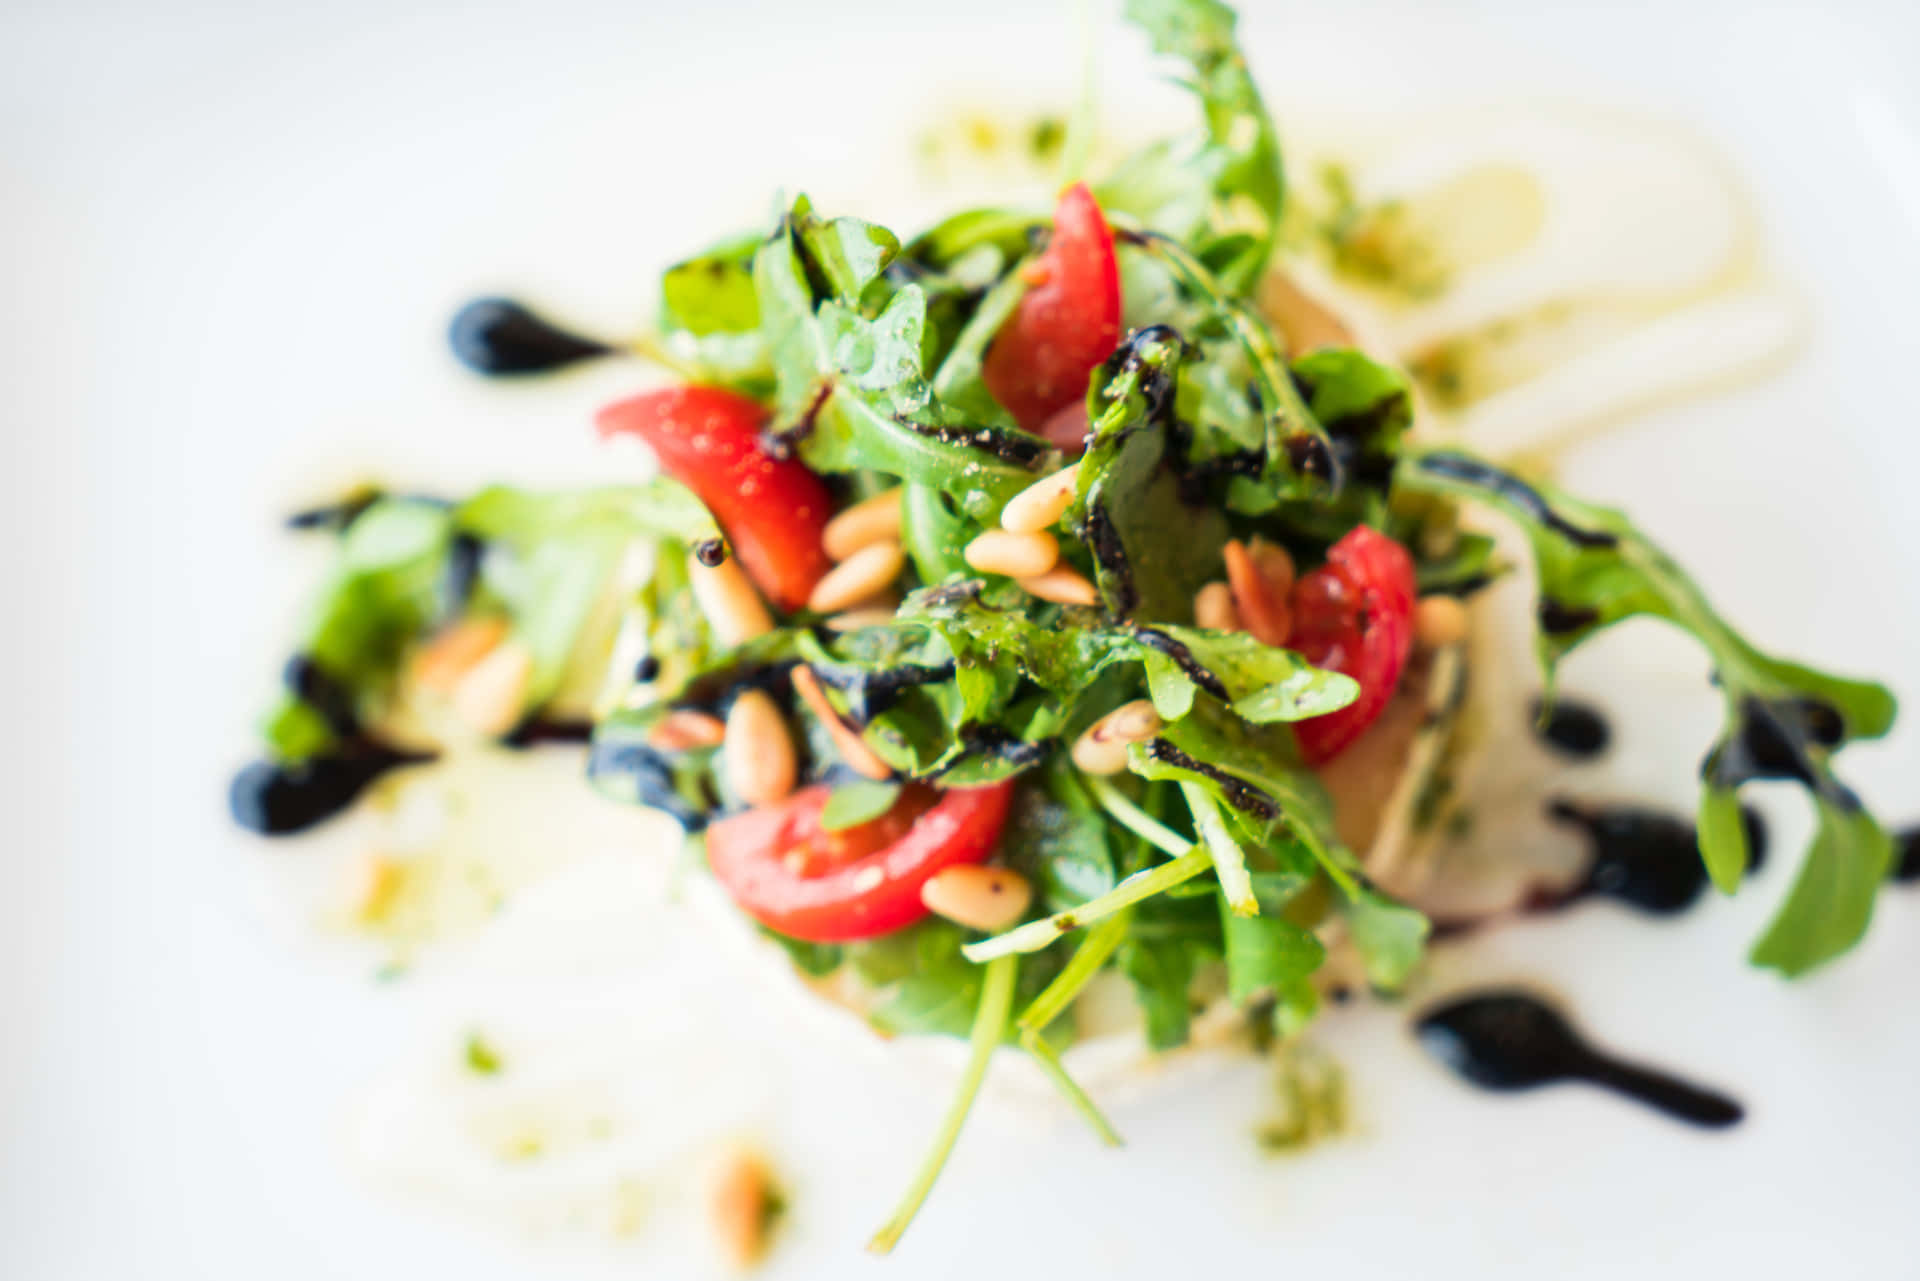 Enjoy a delicious and healthy salad today!